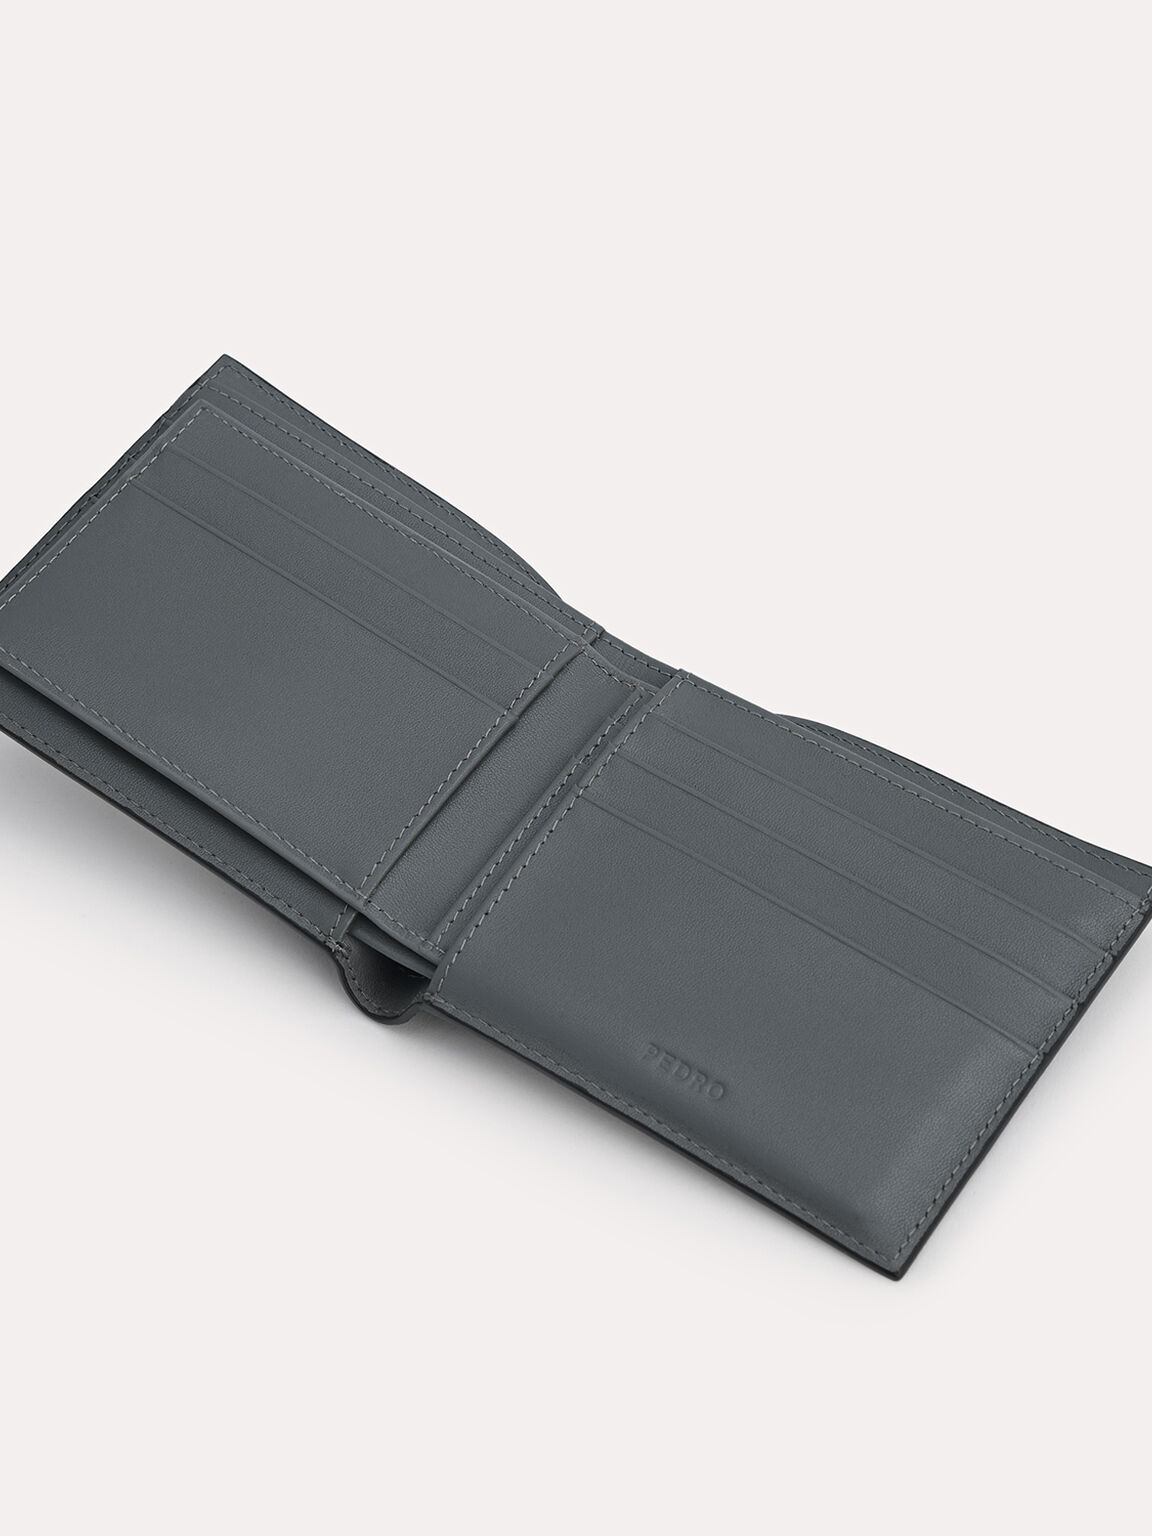 Leather Bi-Fold Wallet with Insert, Dark Grey, hi-res